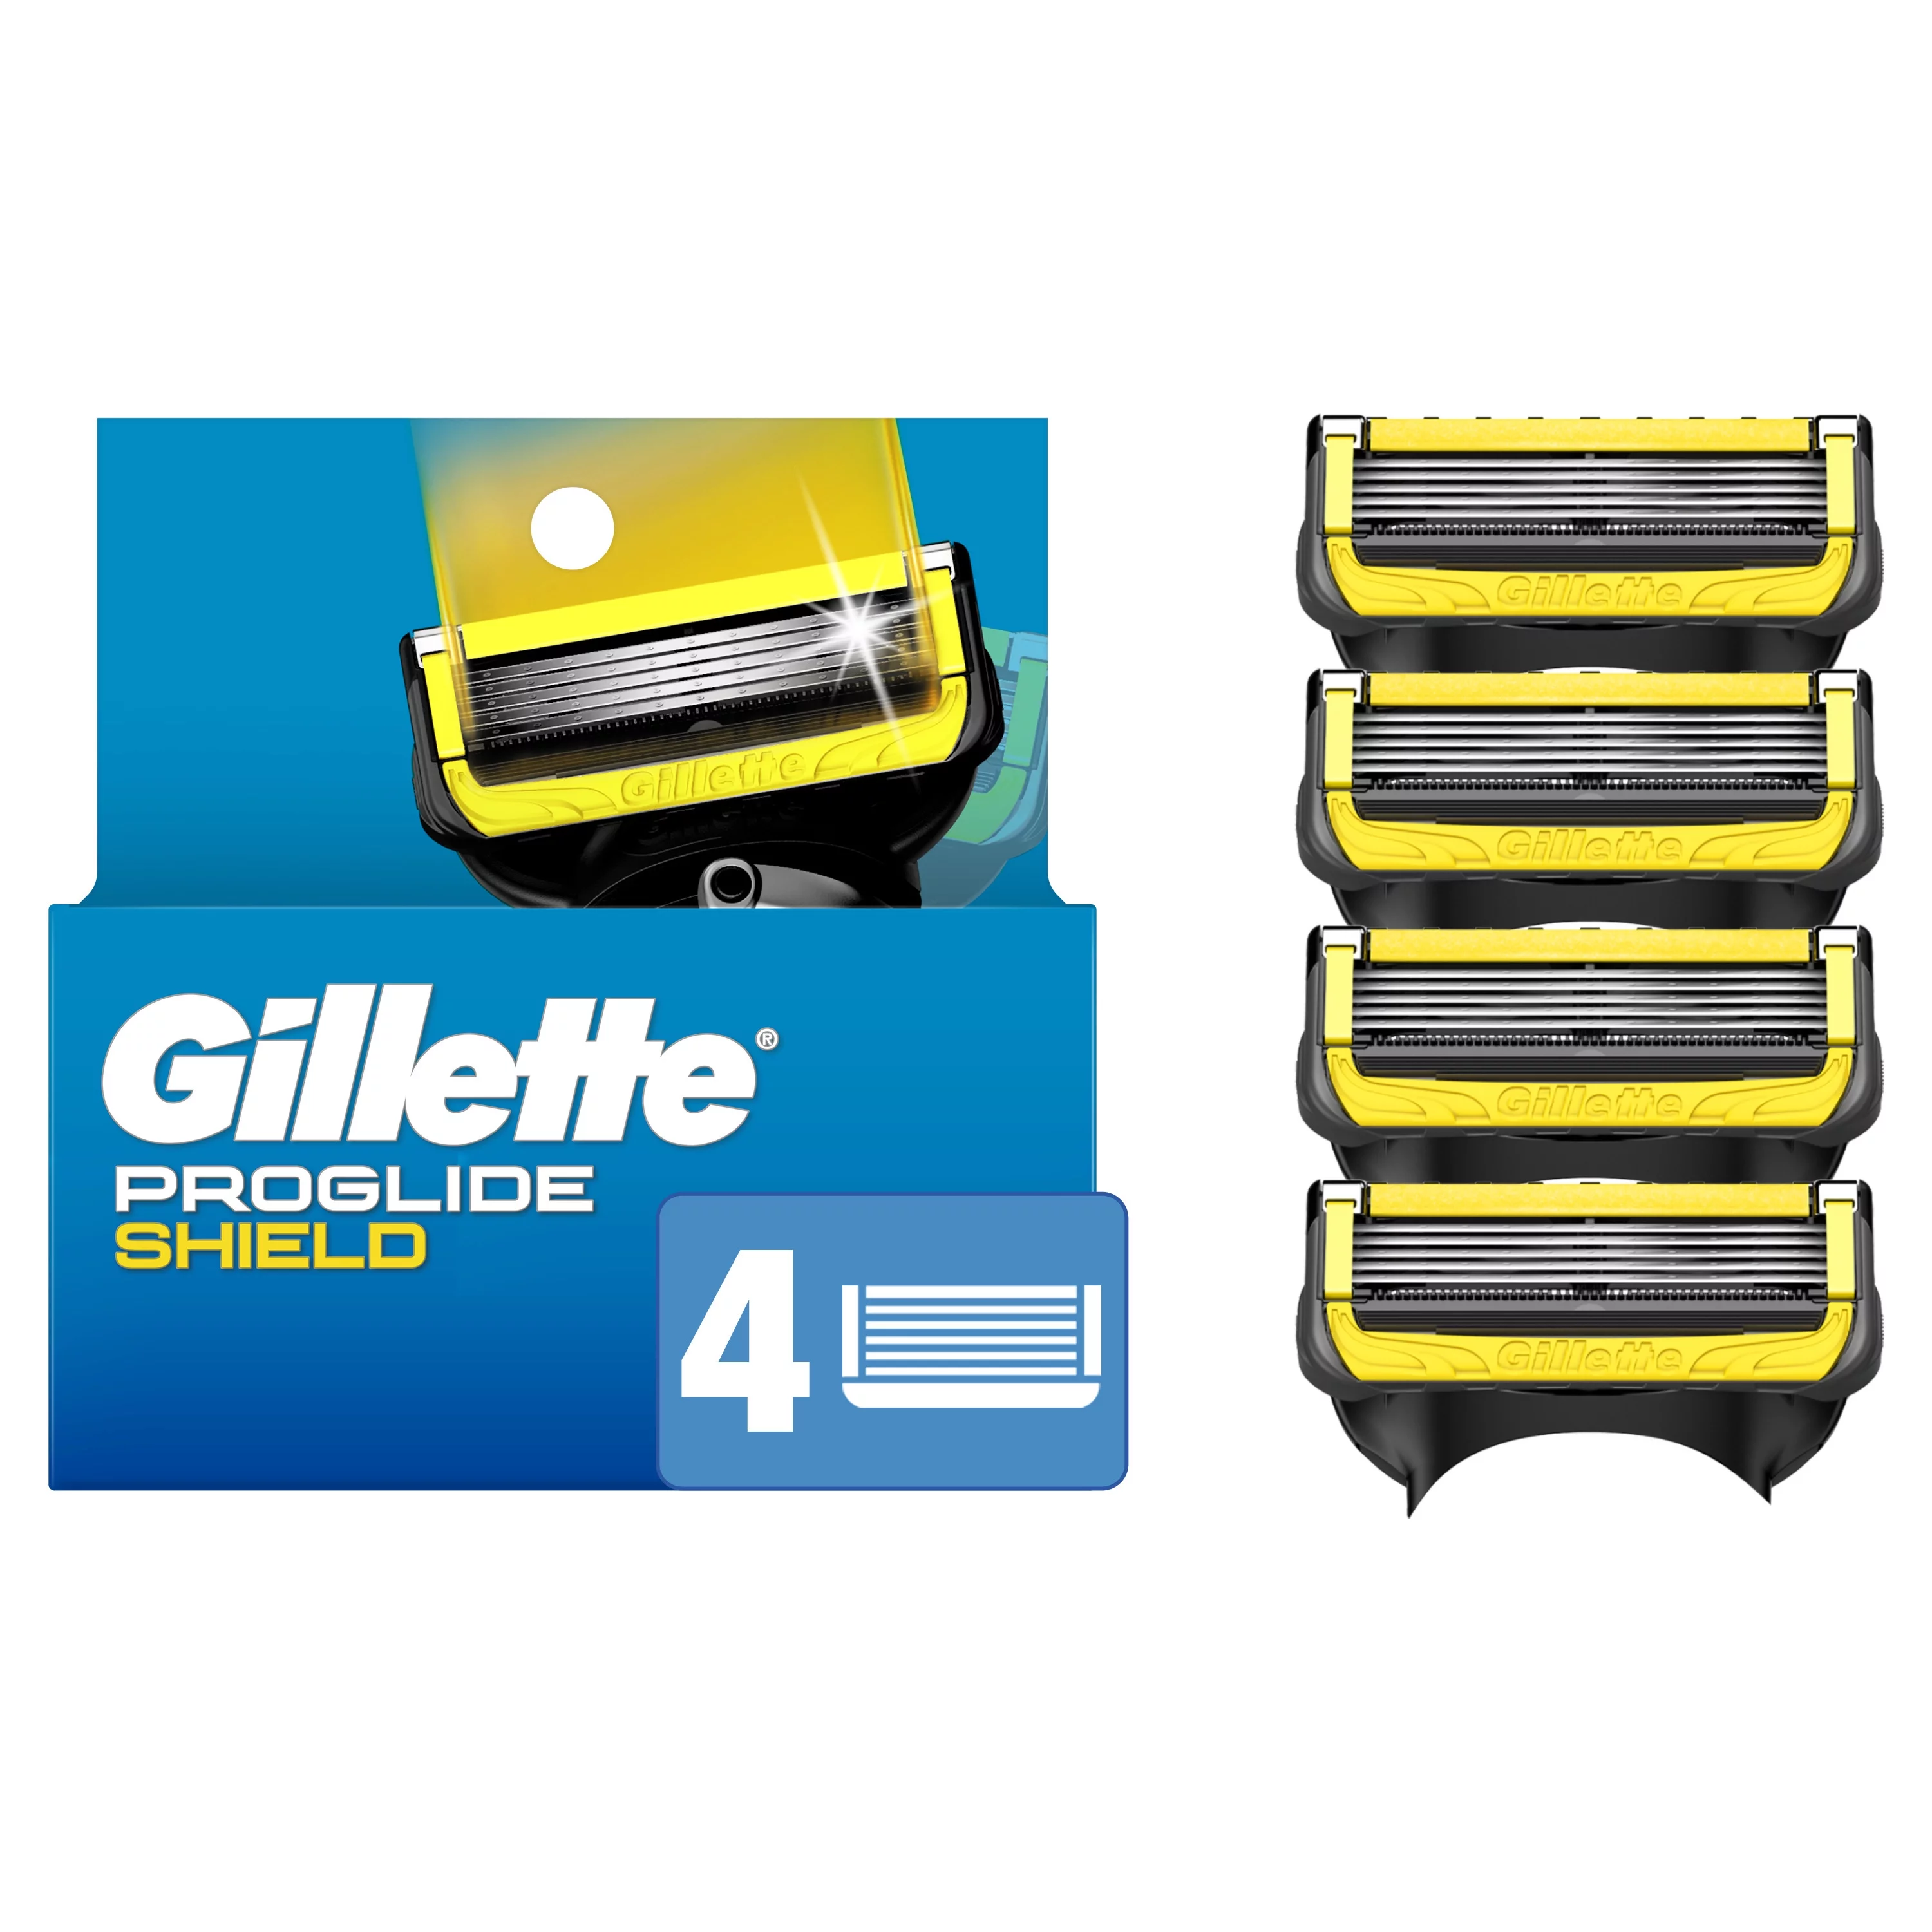 Gillette Pro Glide Shield Men's Razor Blade Refill Cartridges, 4 Ct